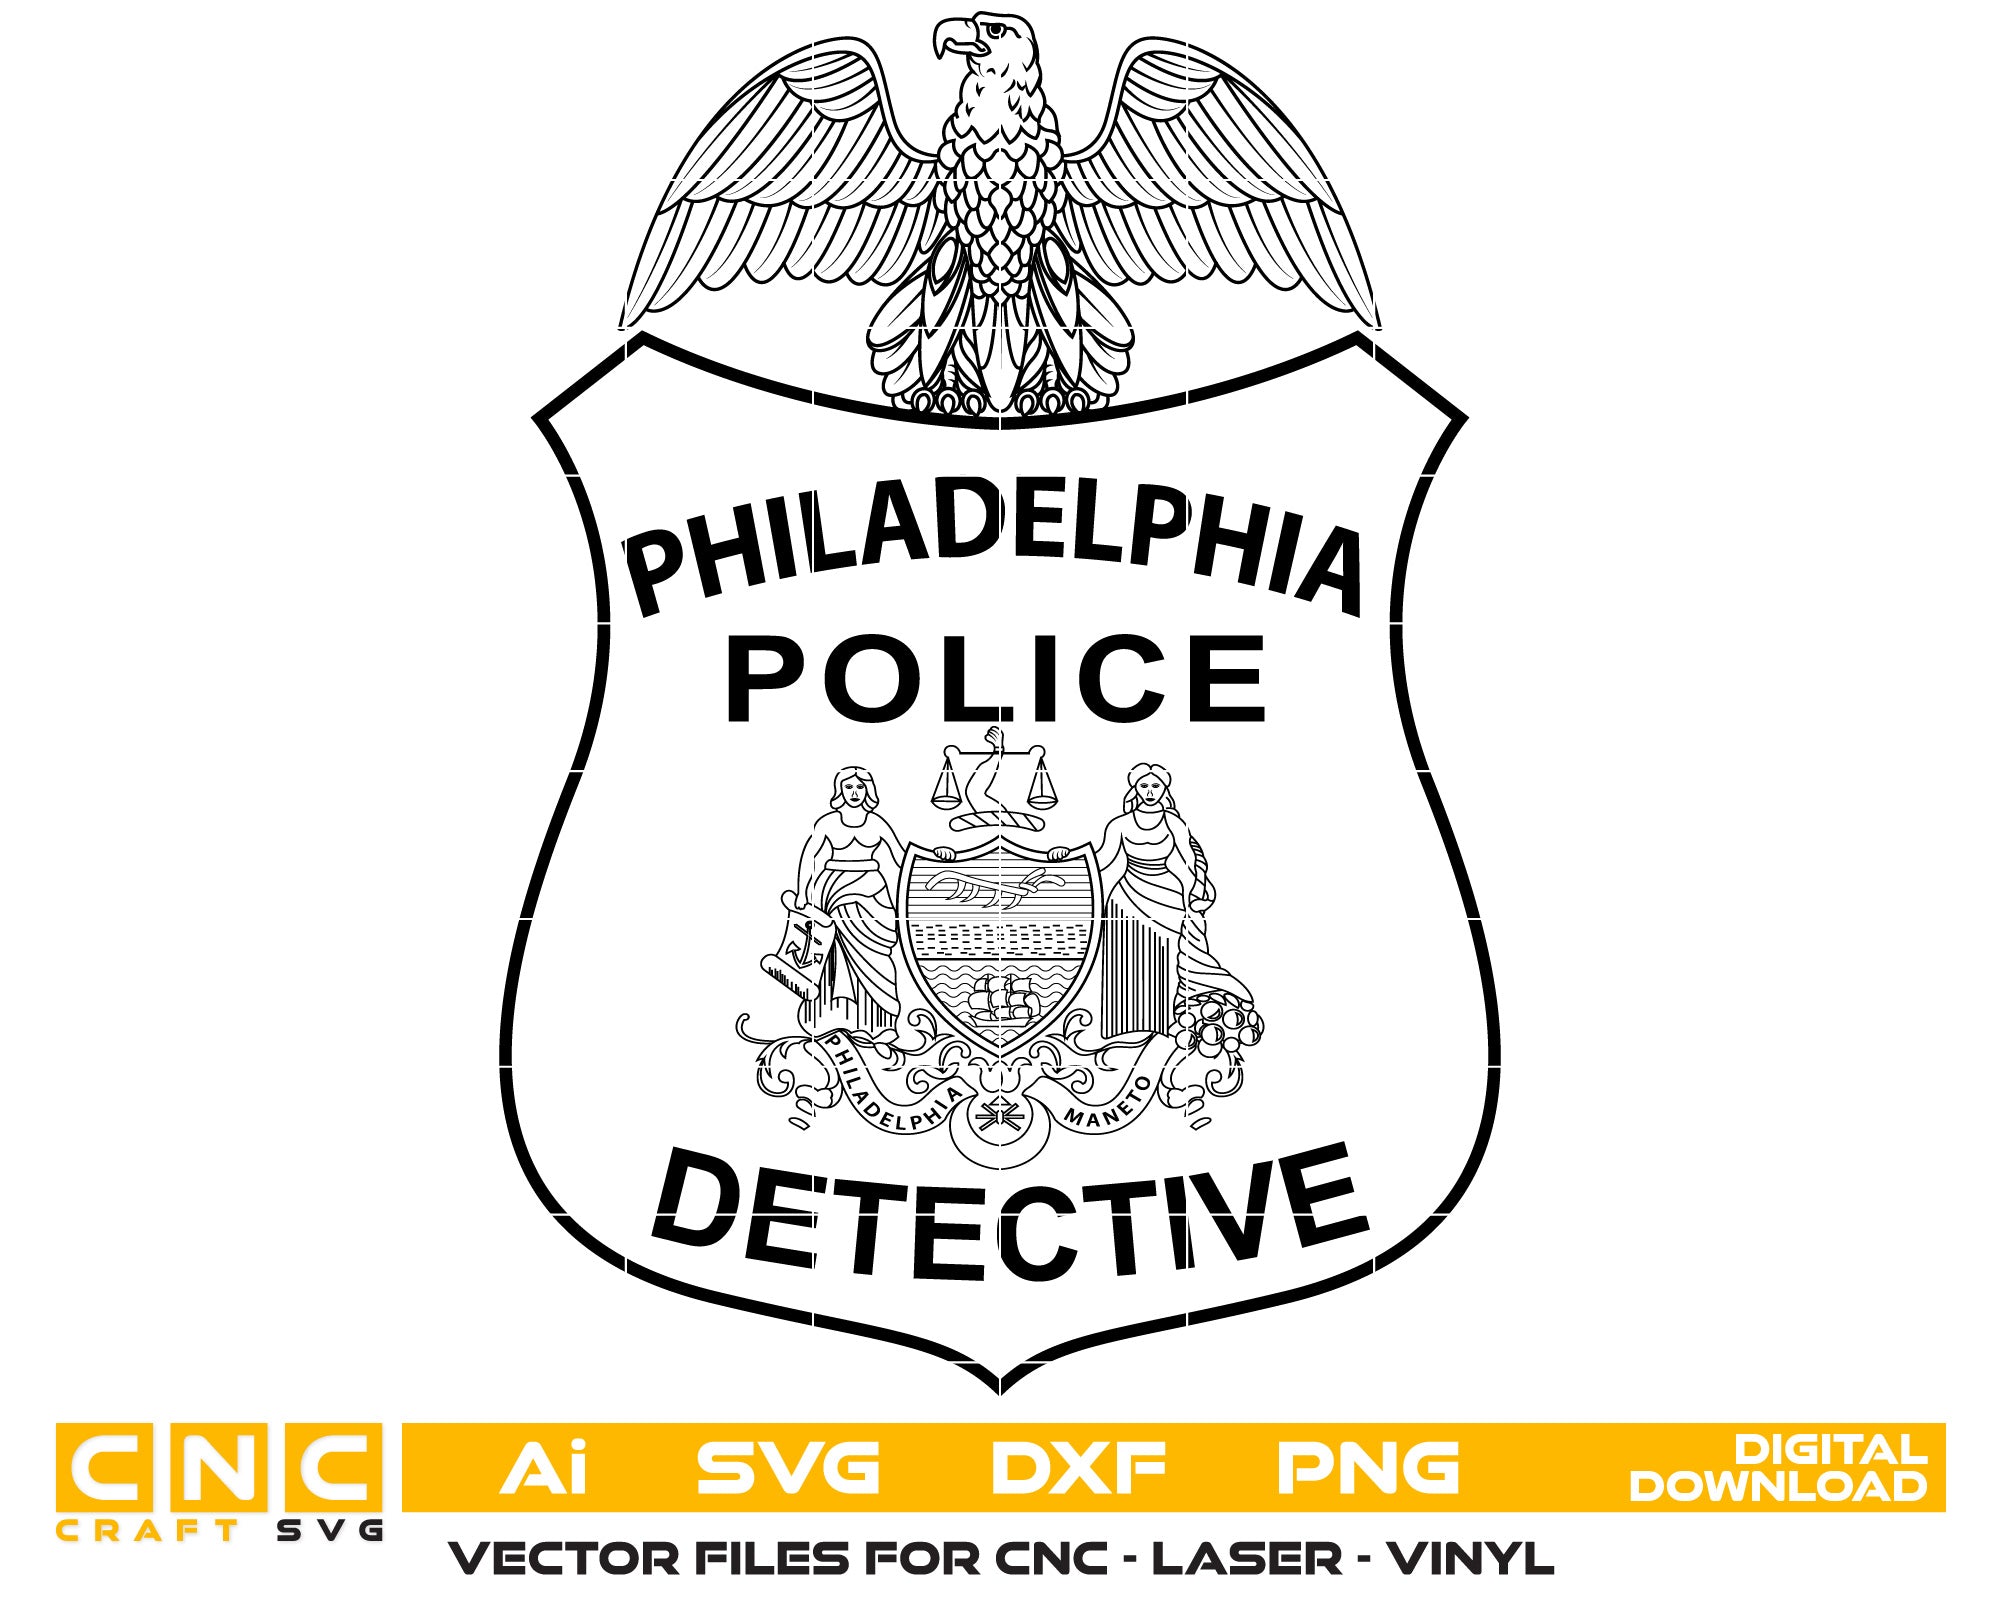 Pheladelphia Detective Police Vector Art, Ai,SVG, DXF, PNG, Digital Files